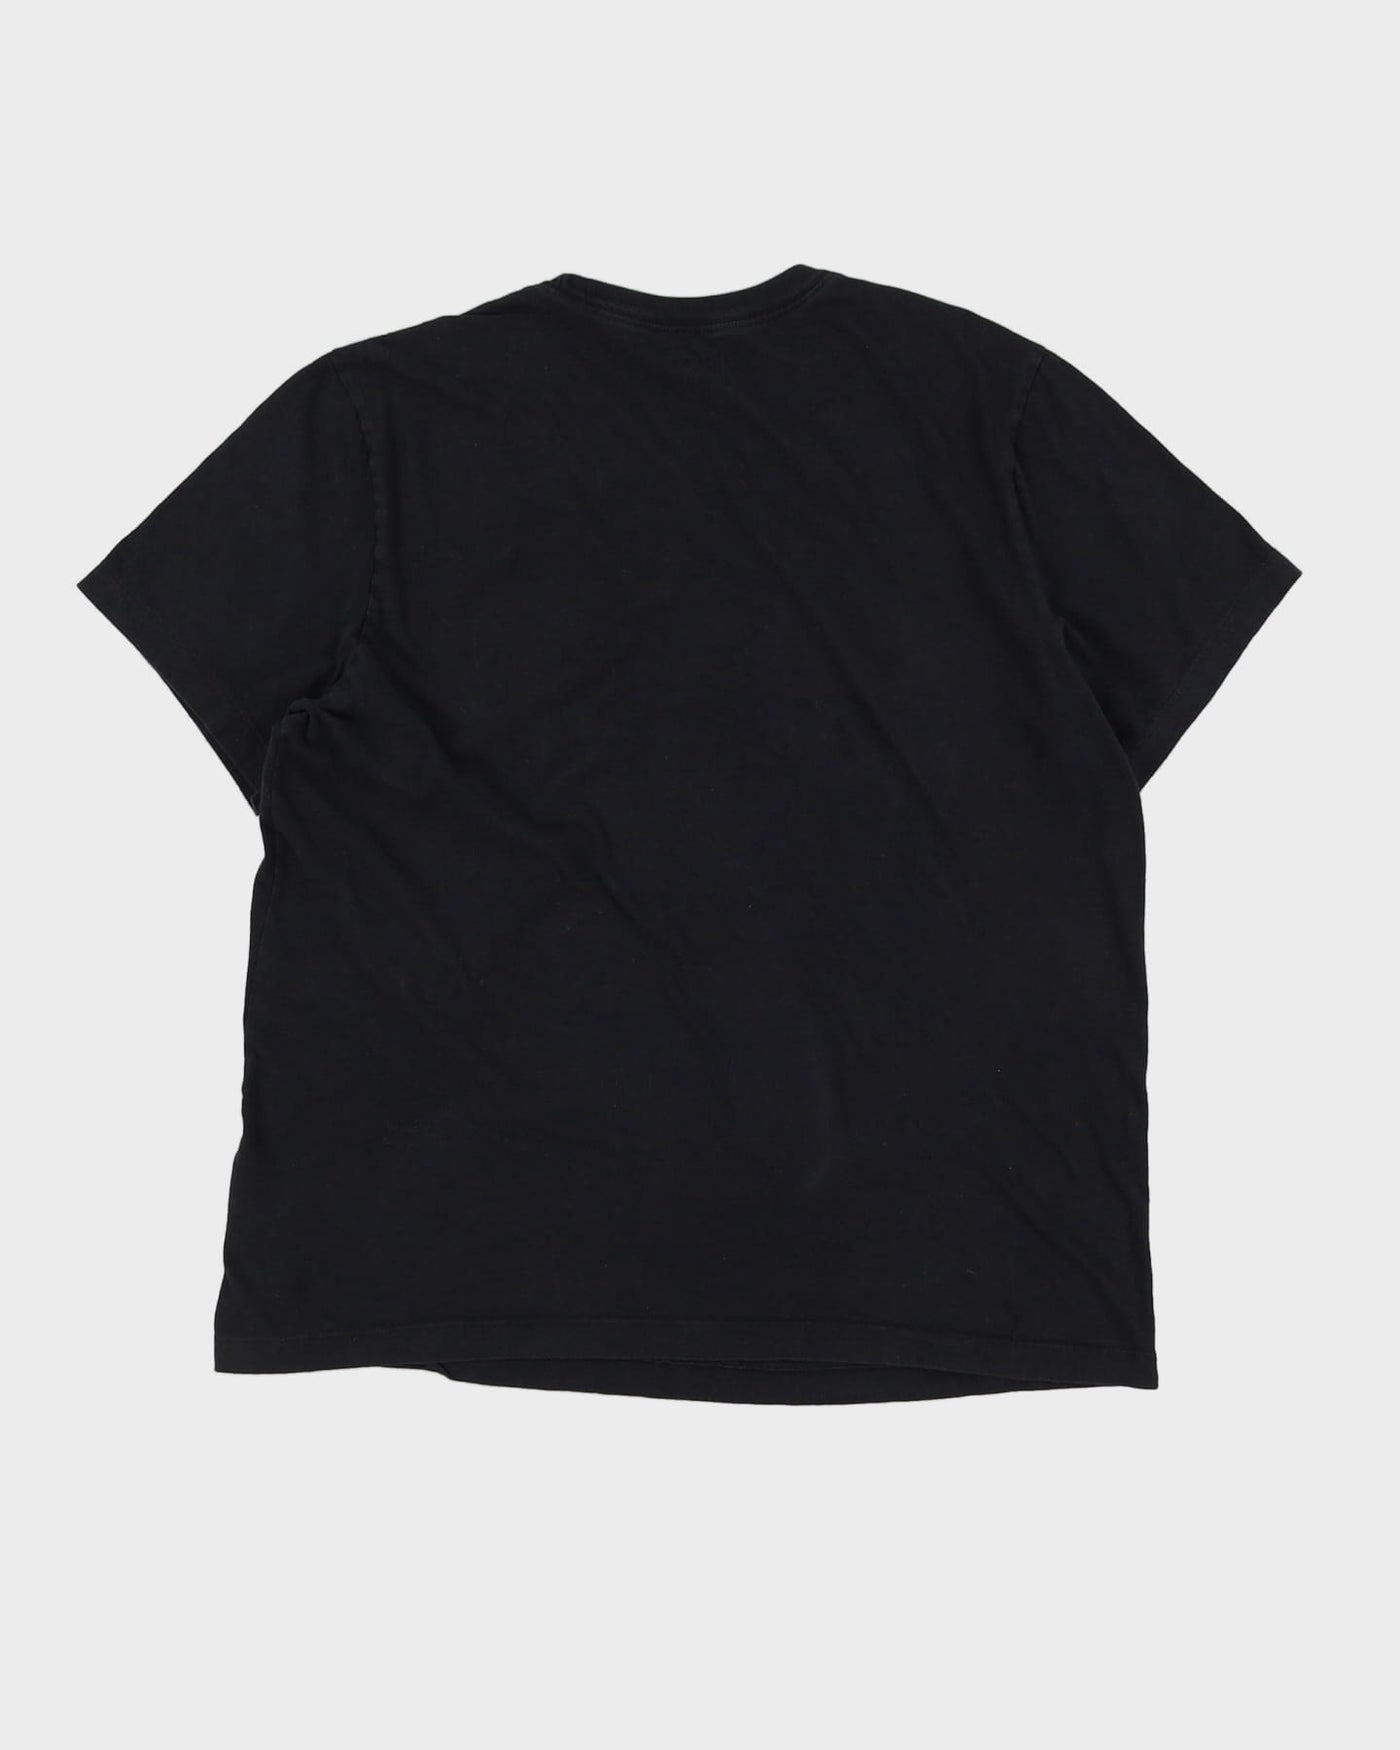 Jordan Jumpman Black Graphic T-Shirt - L